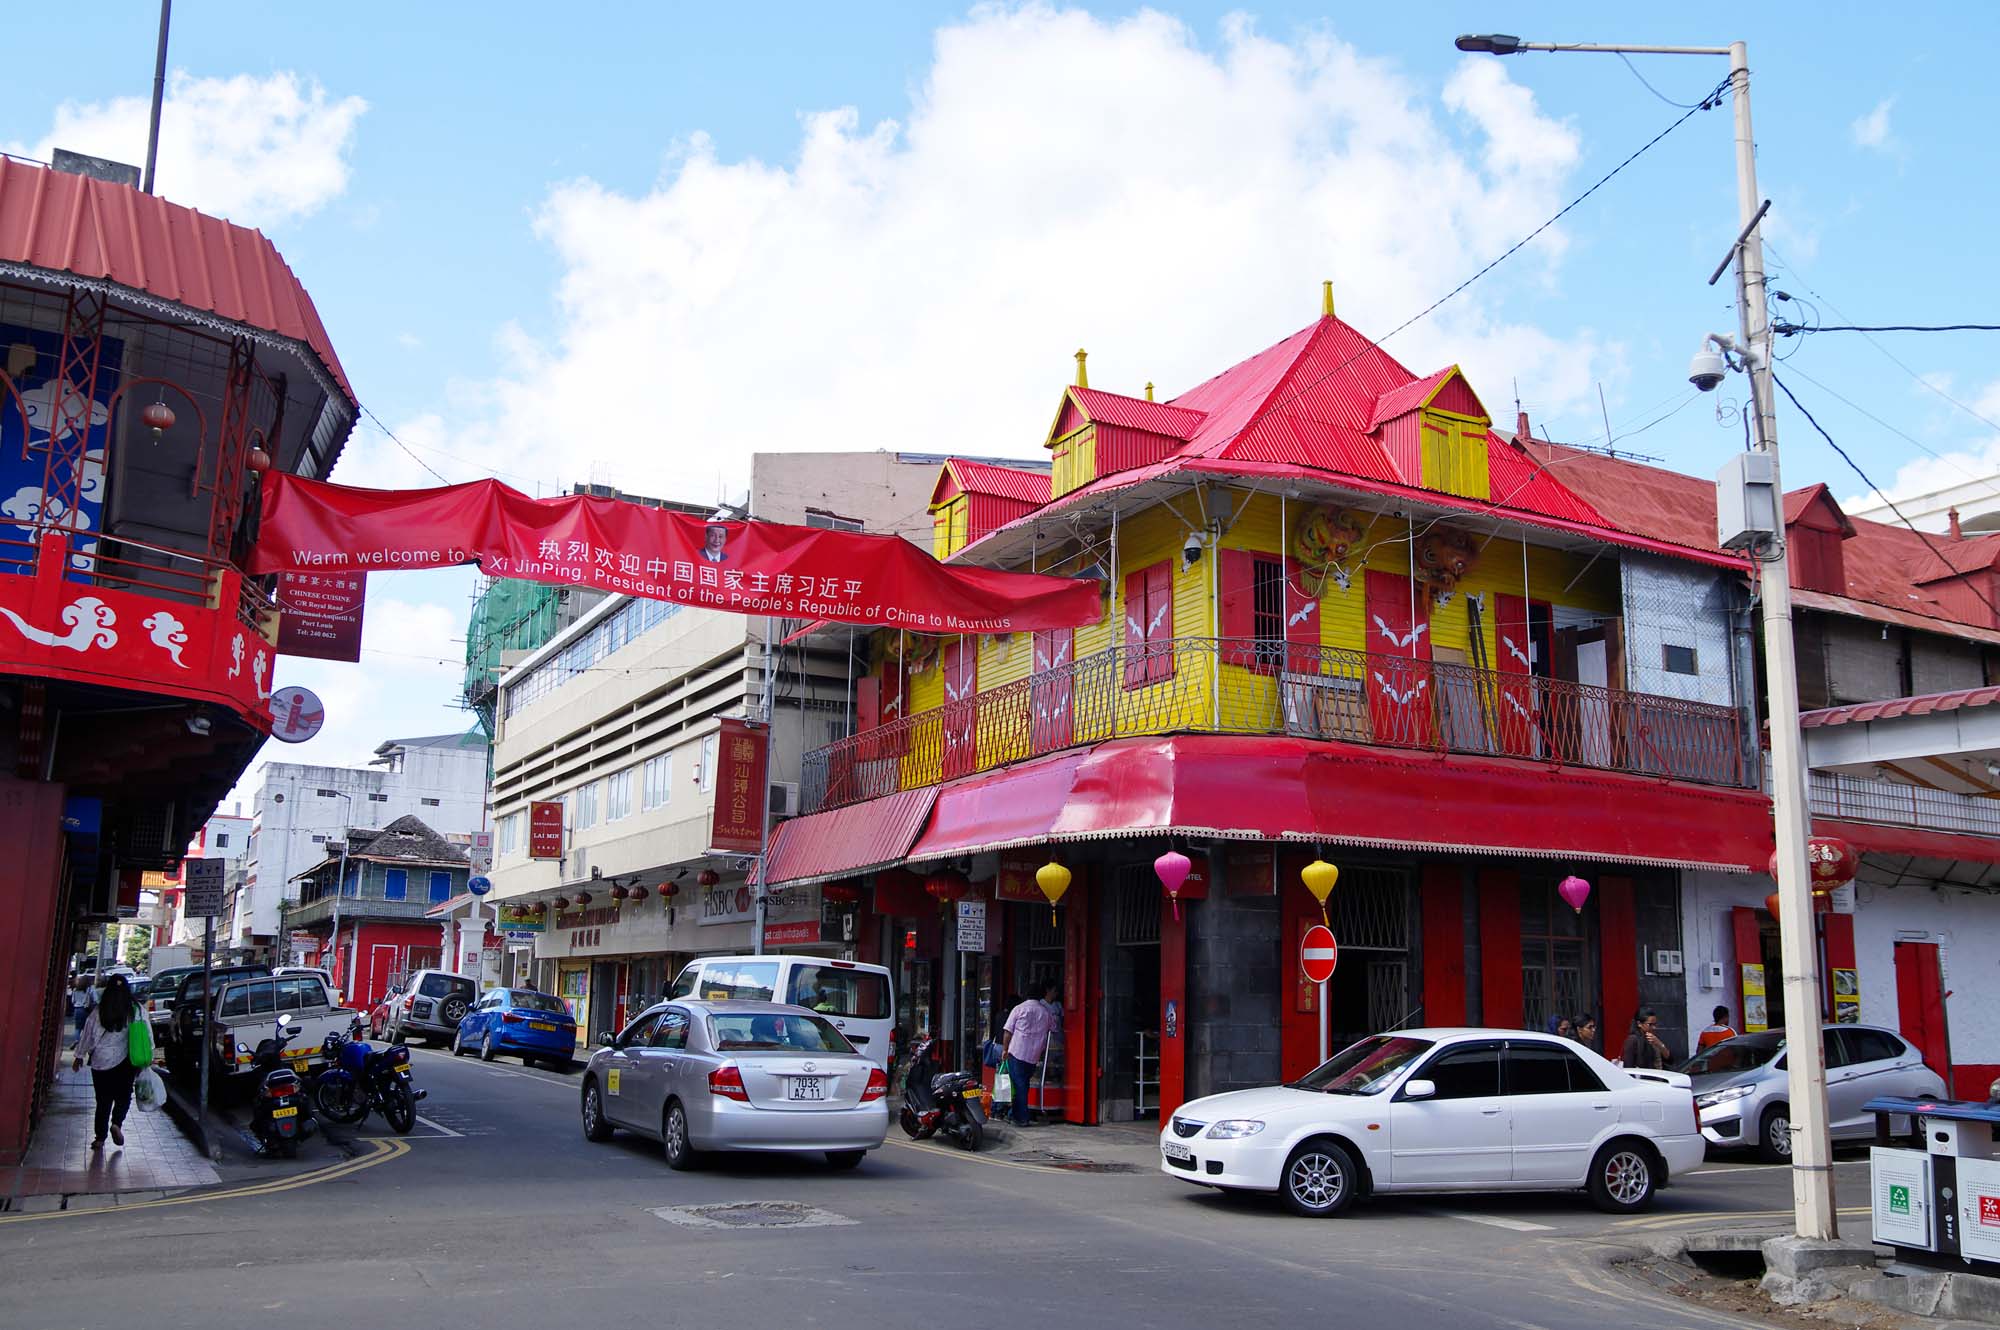 China Town - Port Louis